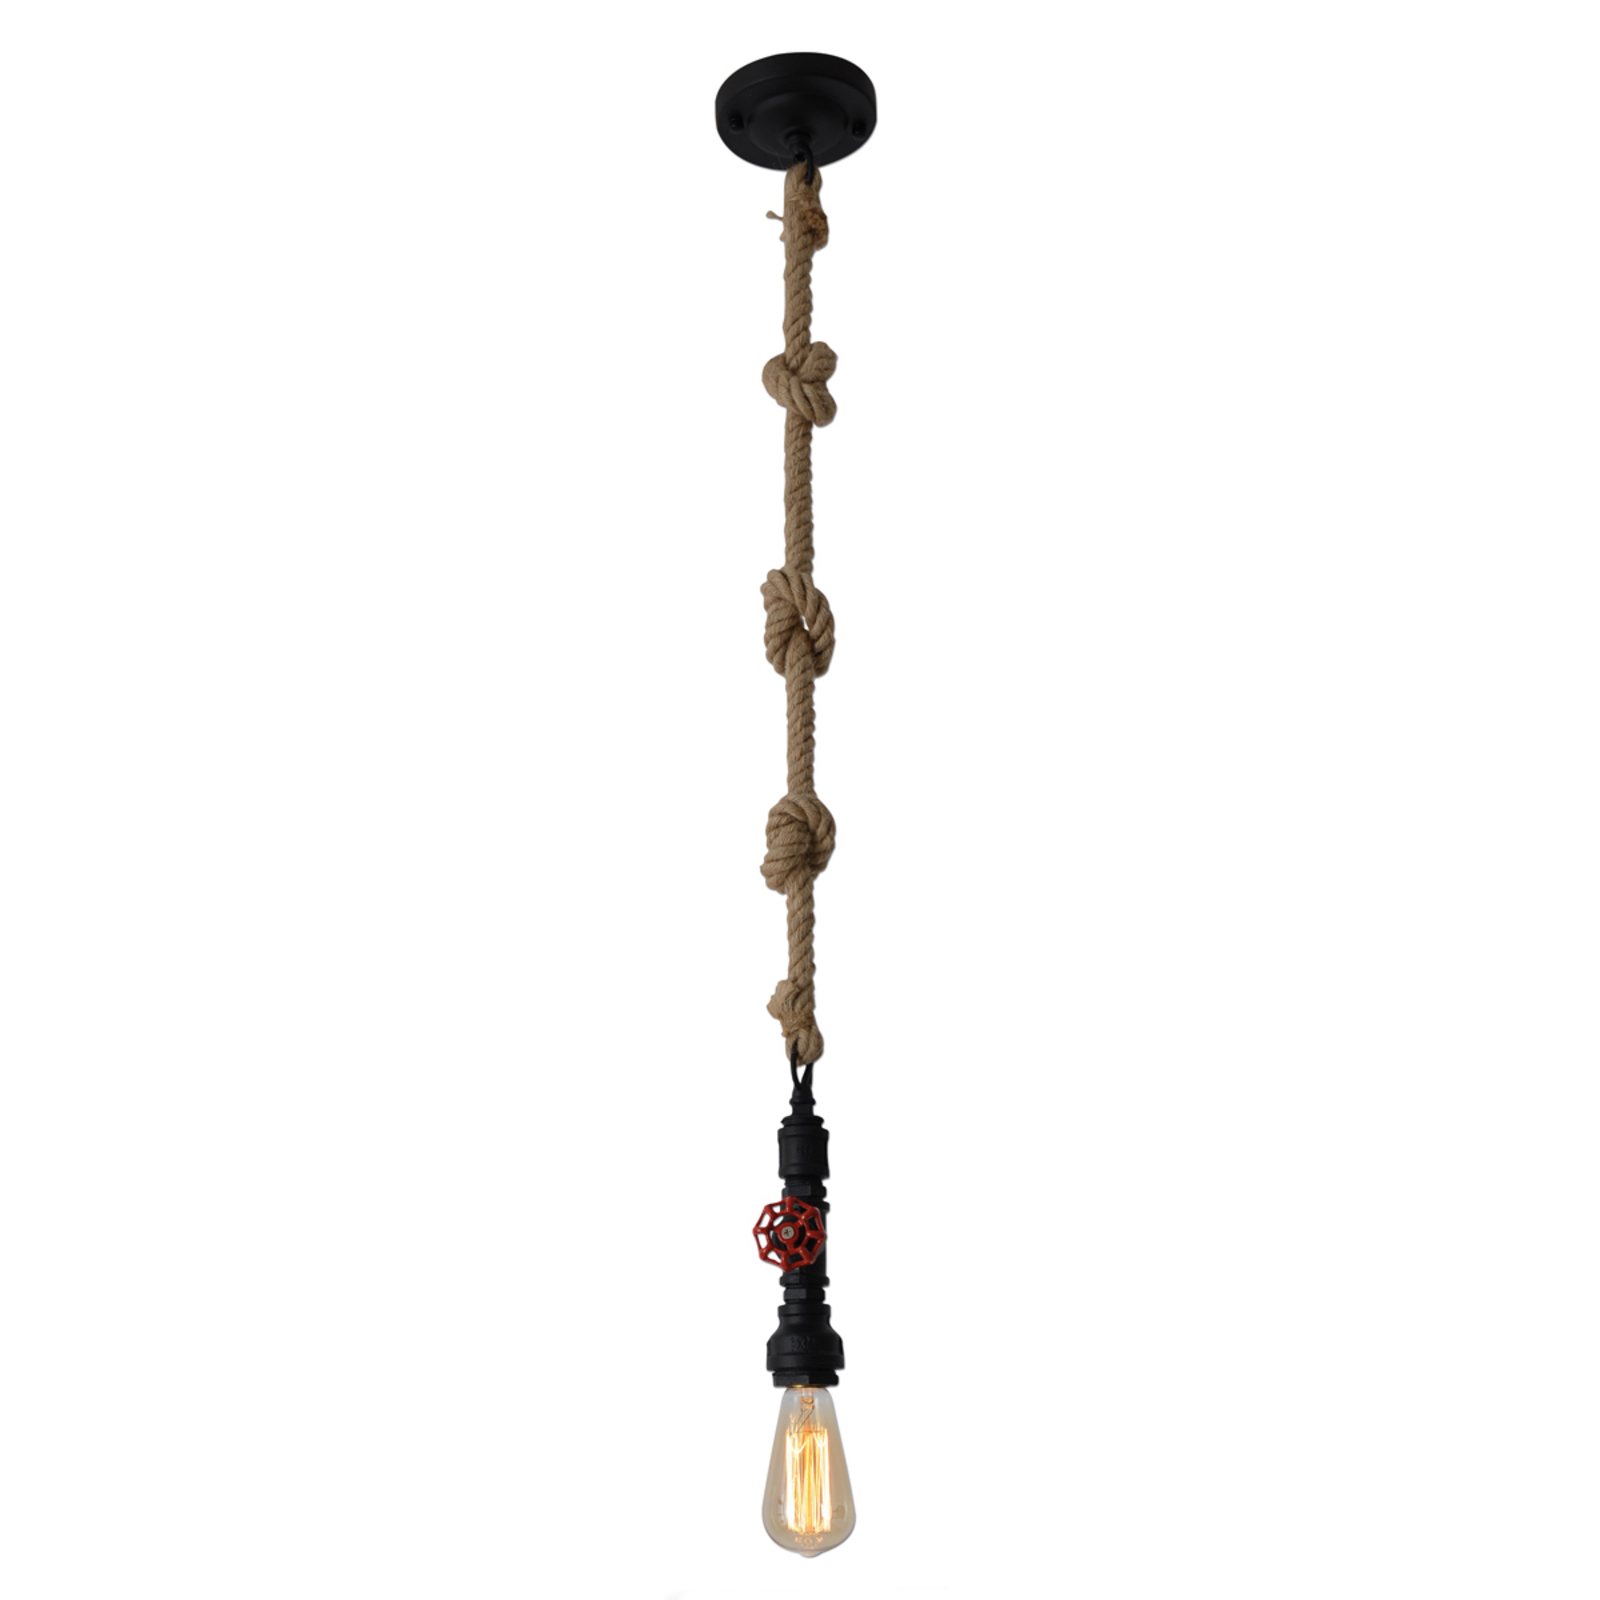 Vintage pendant light with a hemp rope, black